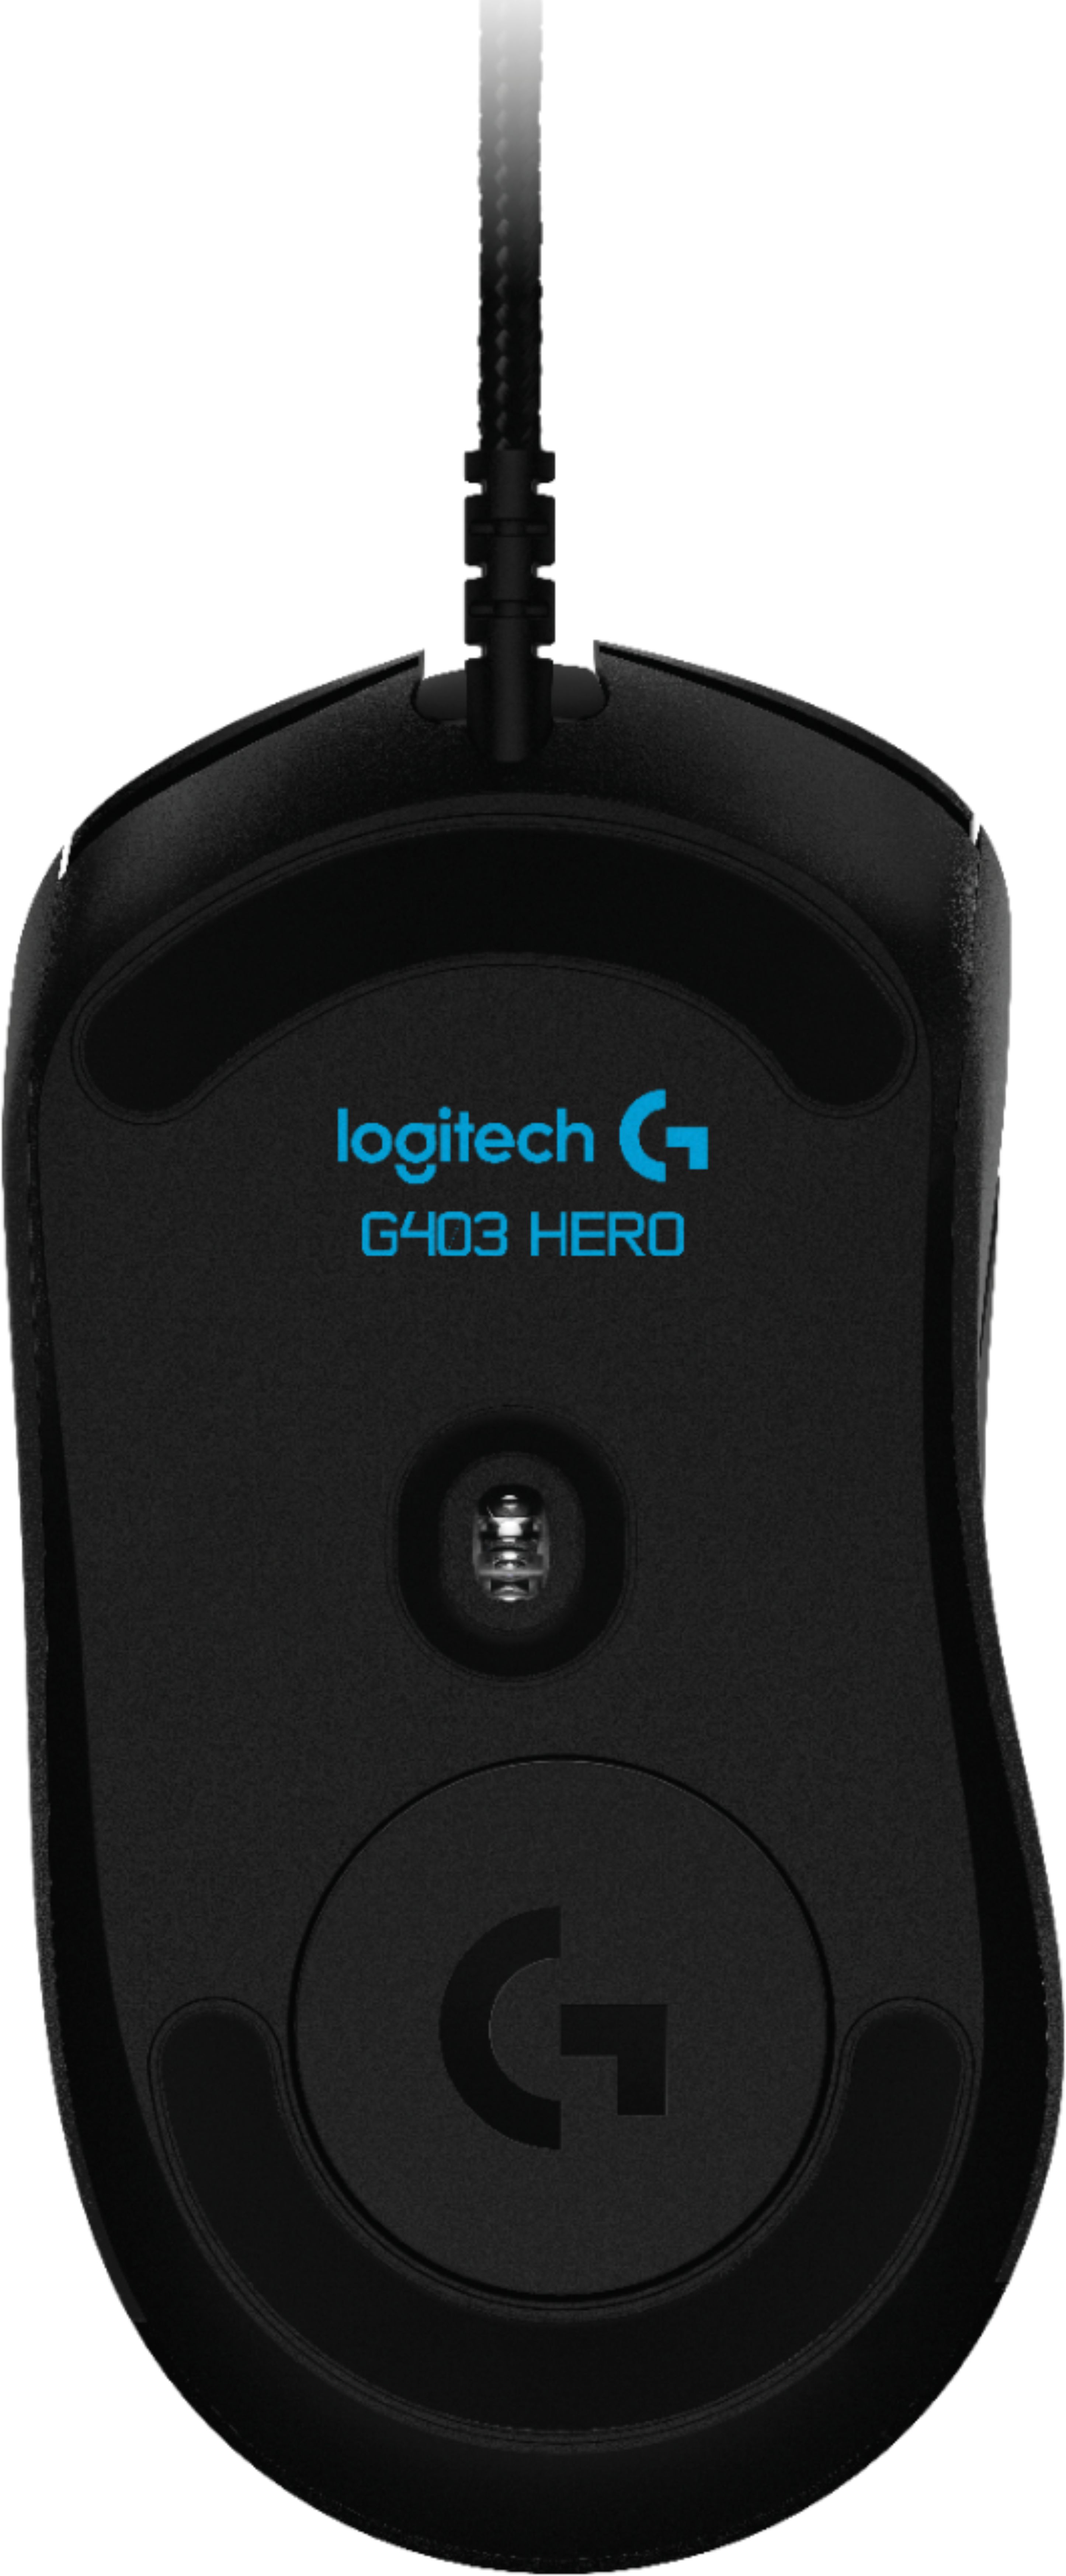 Gaming mouse Logicool Logitech G403 black Ergonomic design RGB